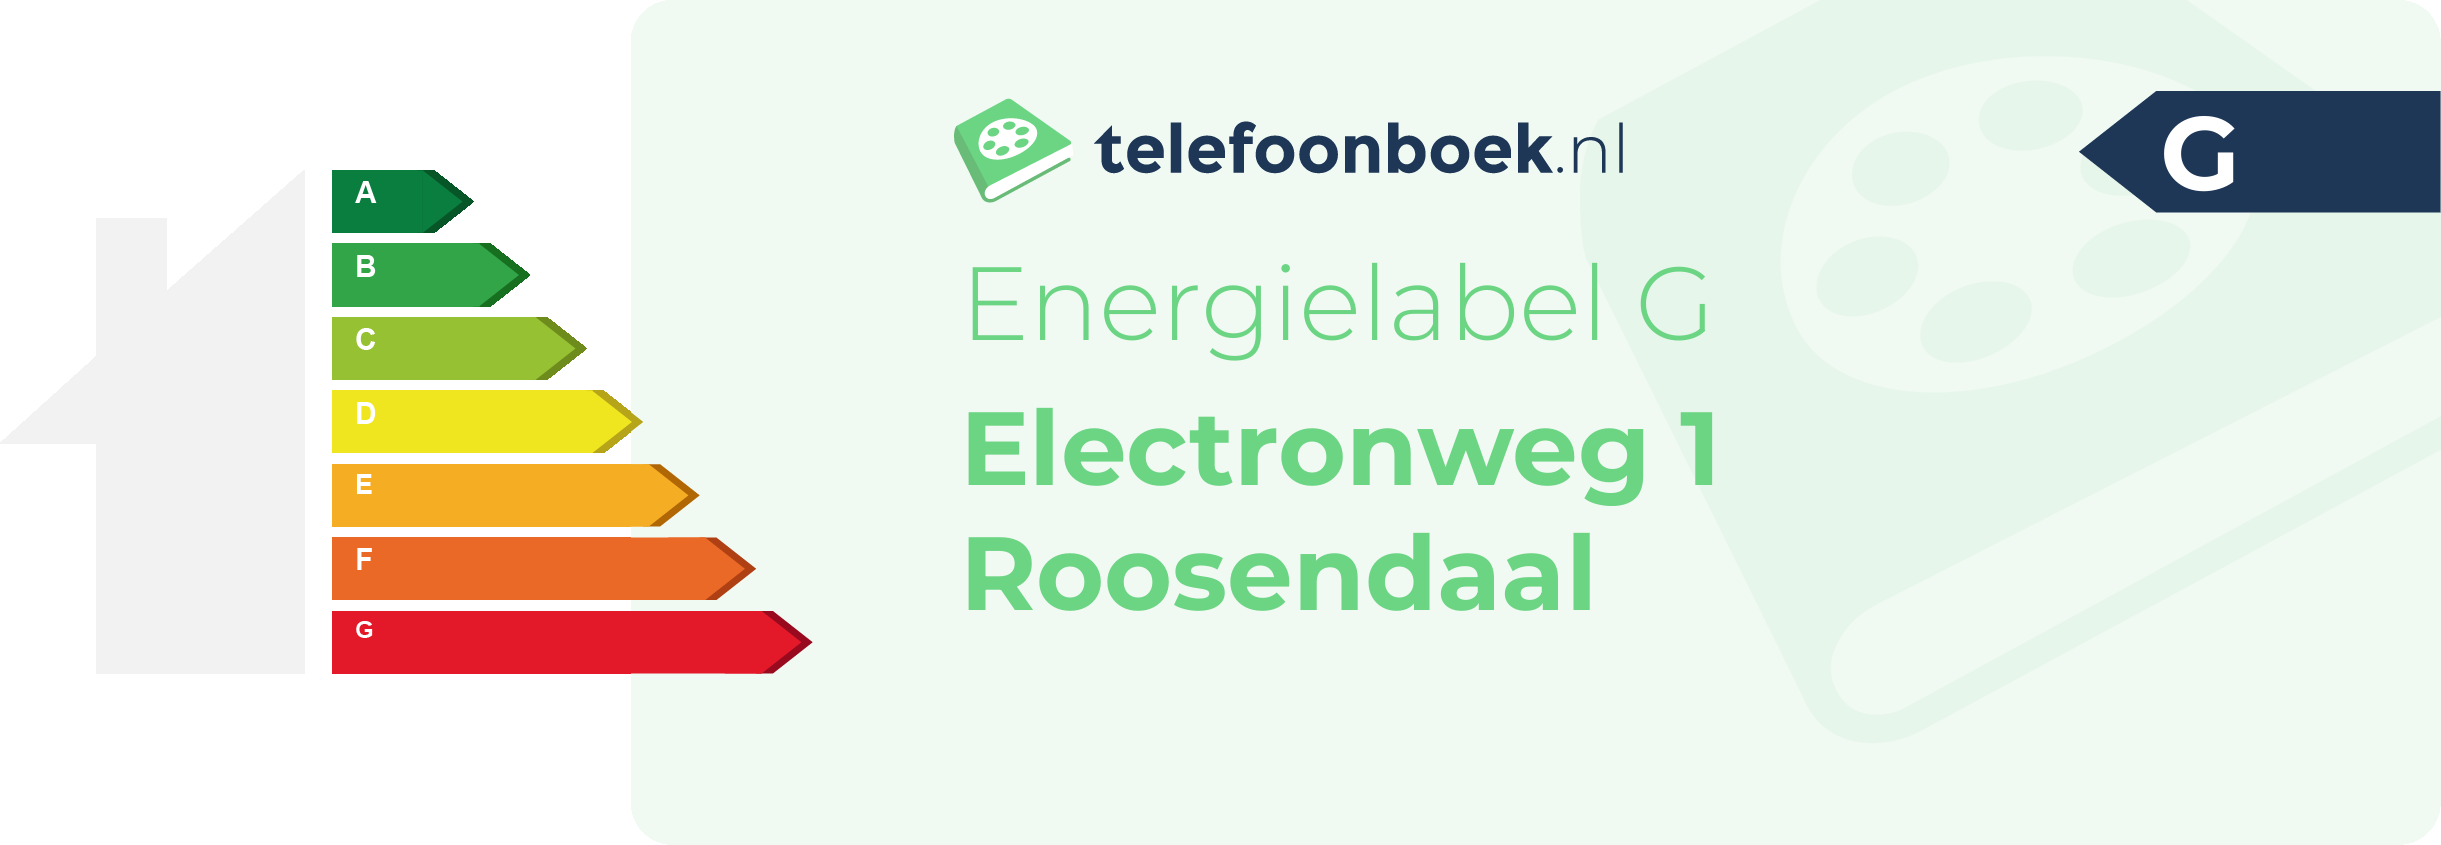 Energielabel Electronweg 1 Roosendaal